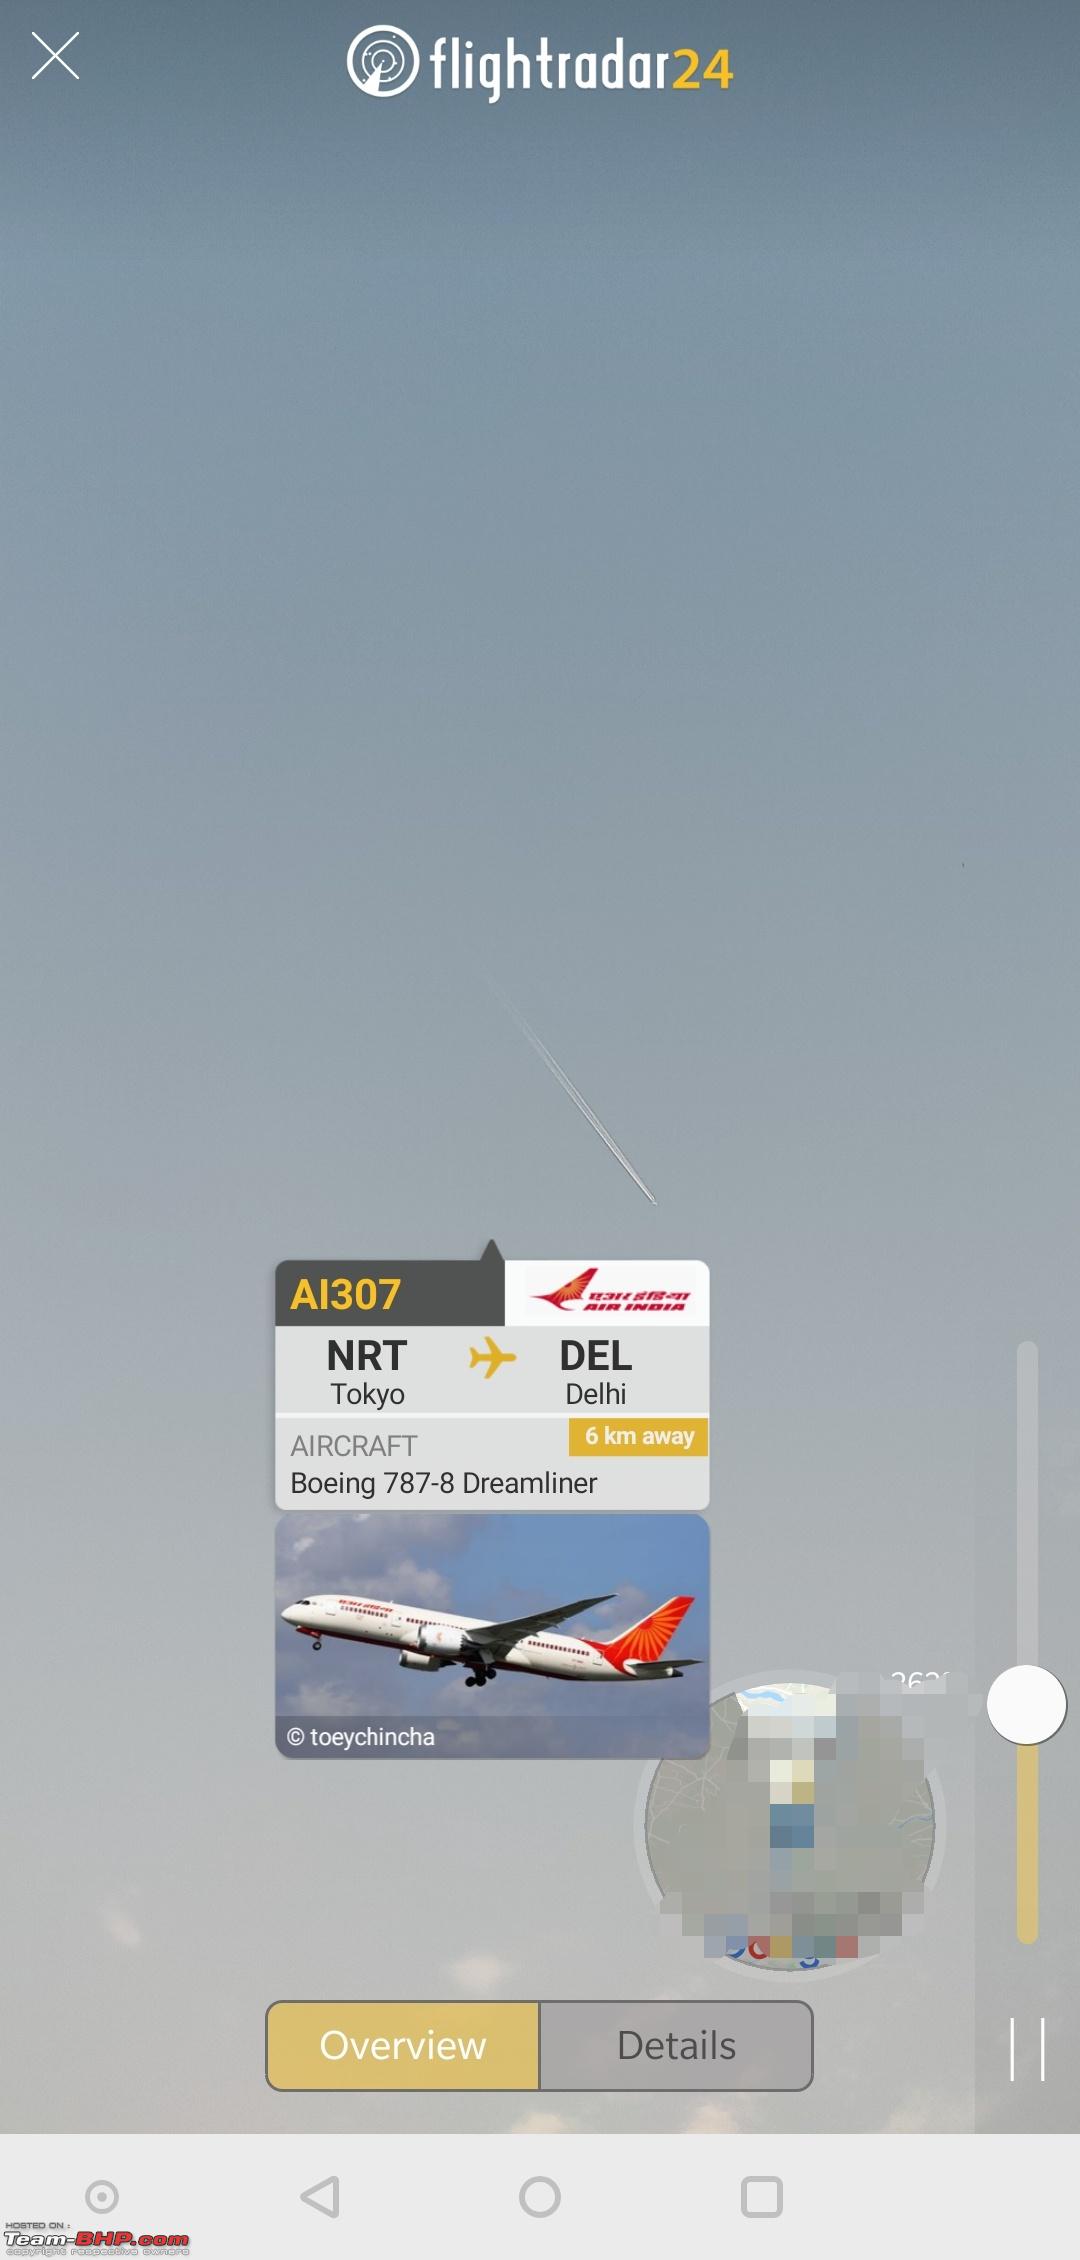 FlightRadar24 - Live Flight Tracker. My experience as a host - Page 6 -  Team-BHP